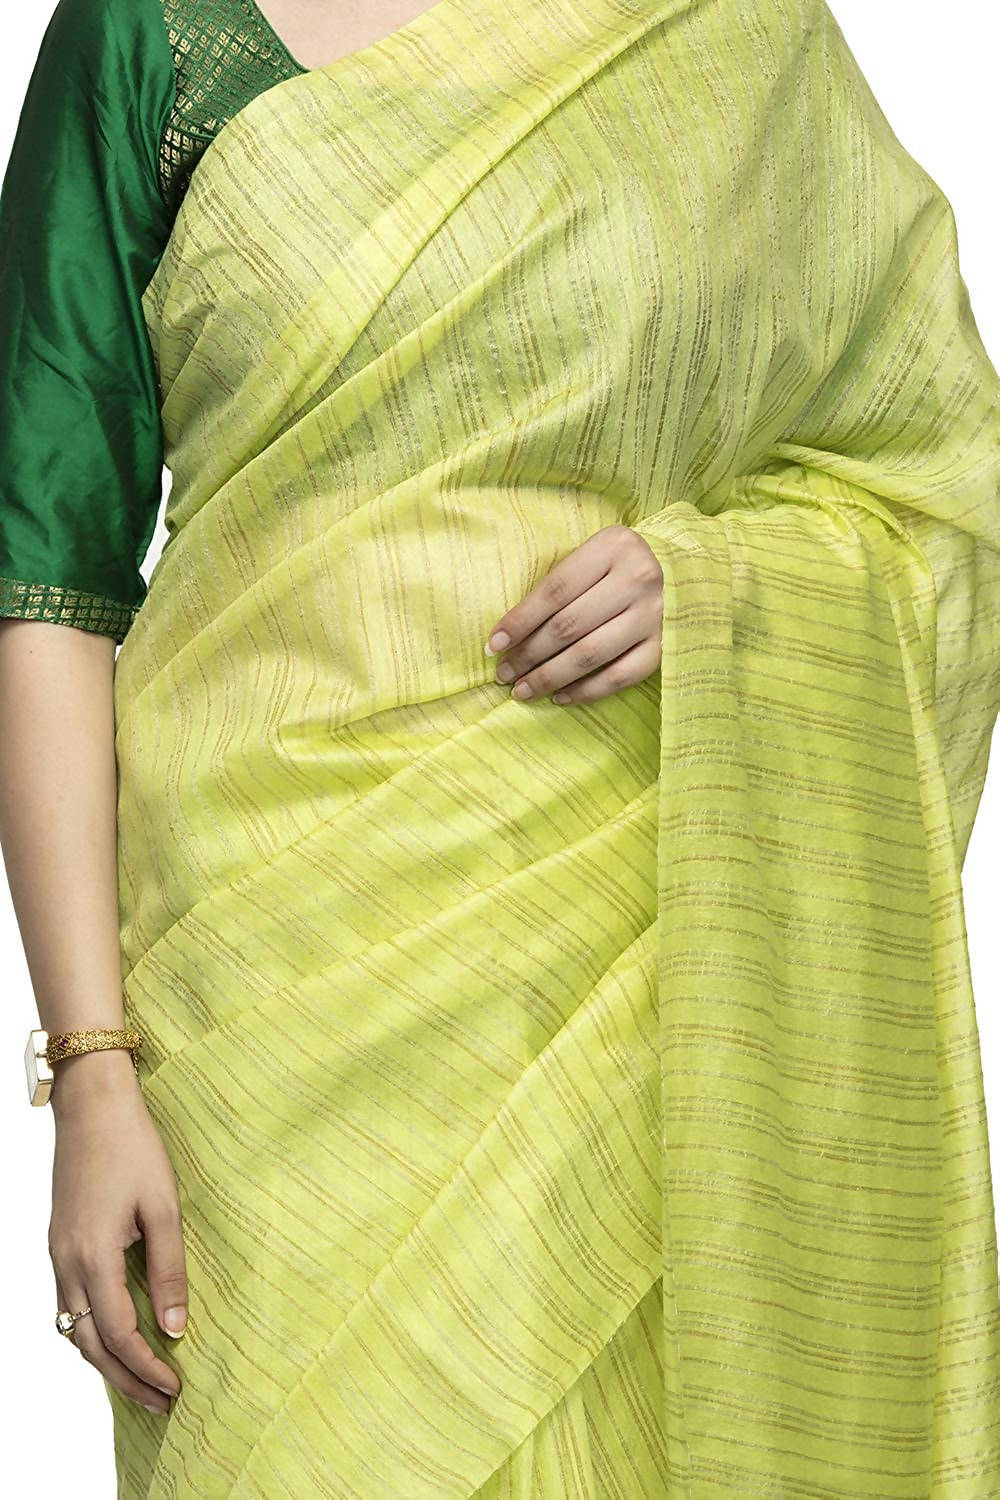 Mominos Fashion Light Parrot Green Color Bhagalpuri Saree